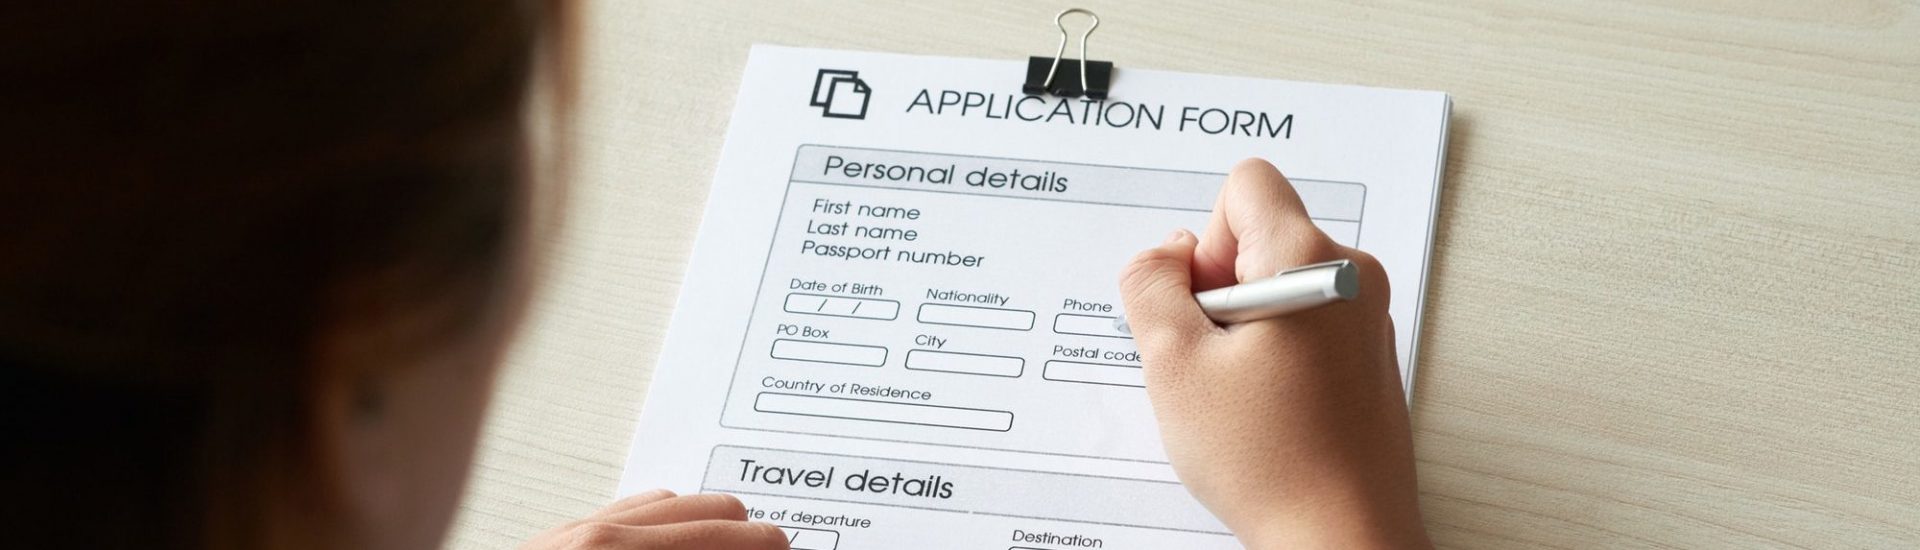 Filling application form